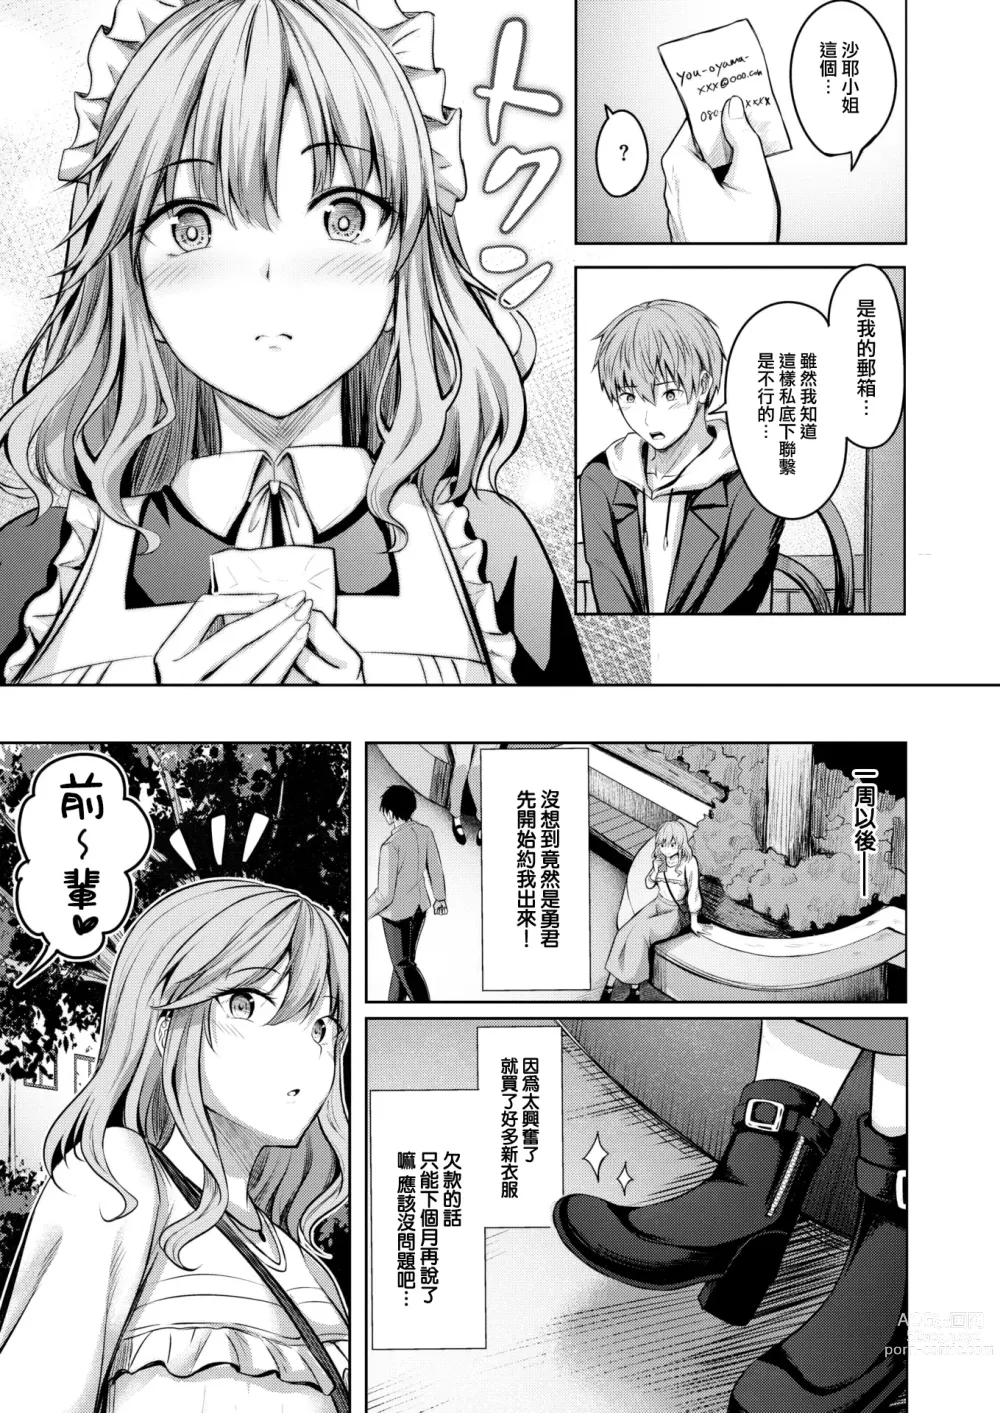 Page 6 of manga Maid@Main